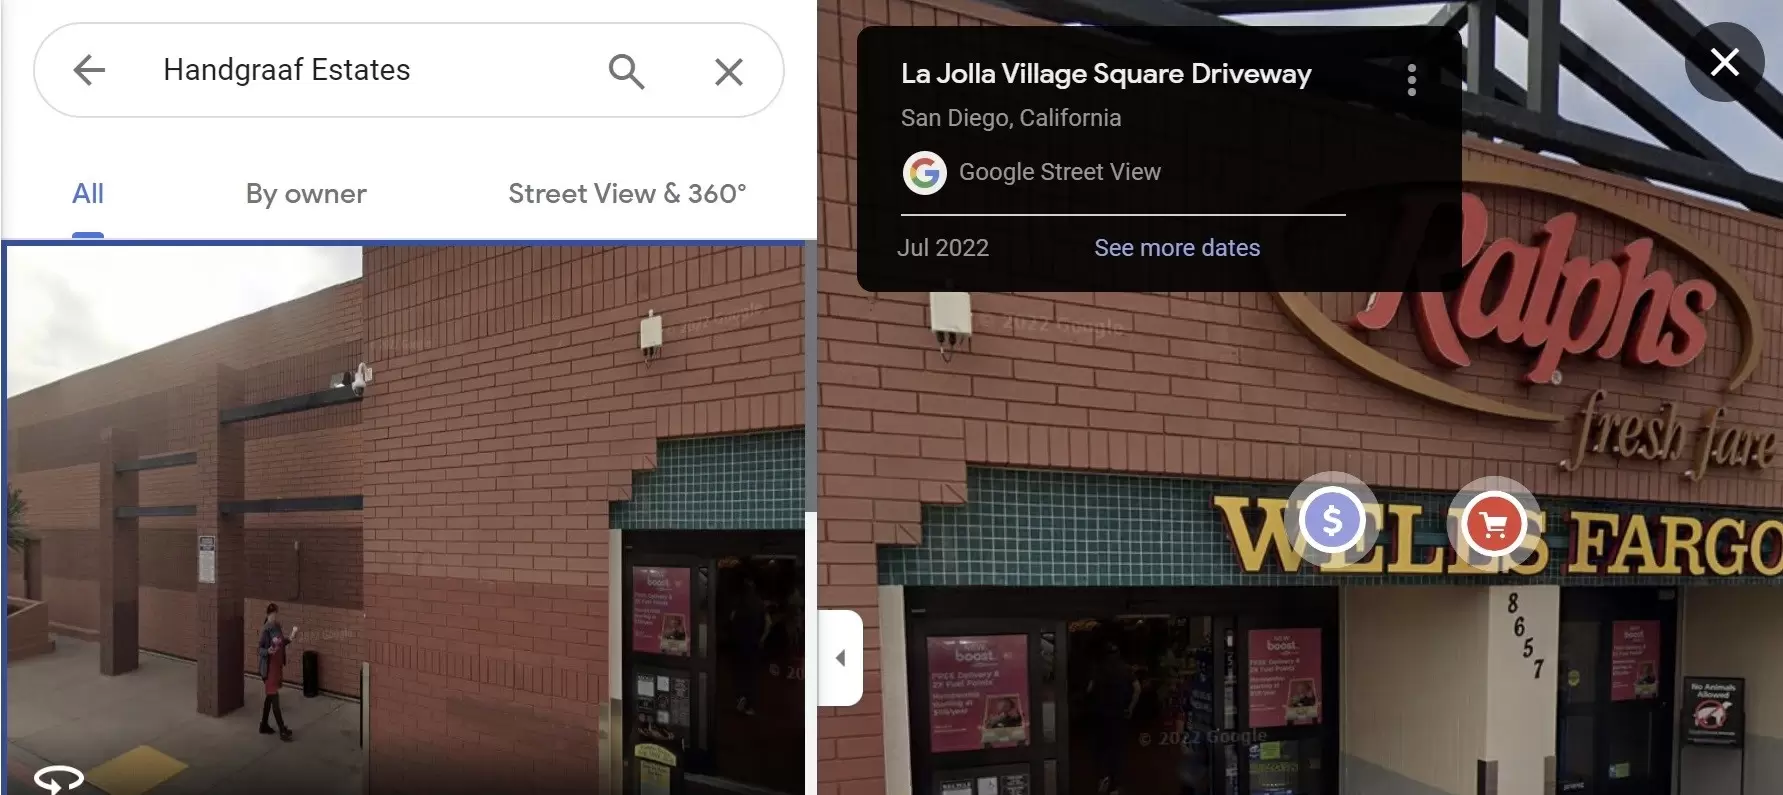 Google Street View of Handgraaf Estates